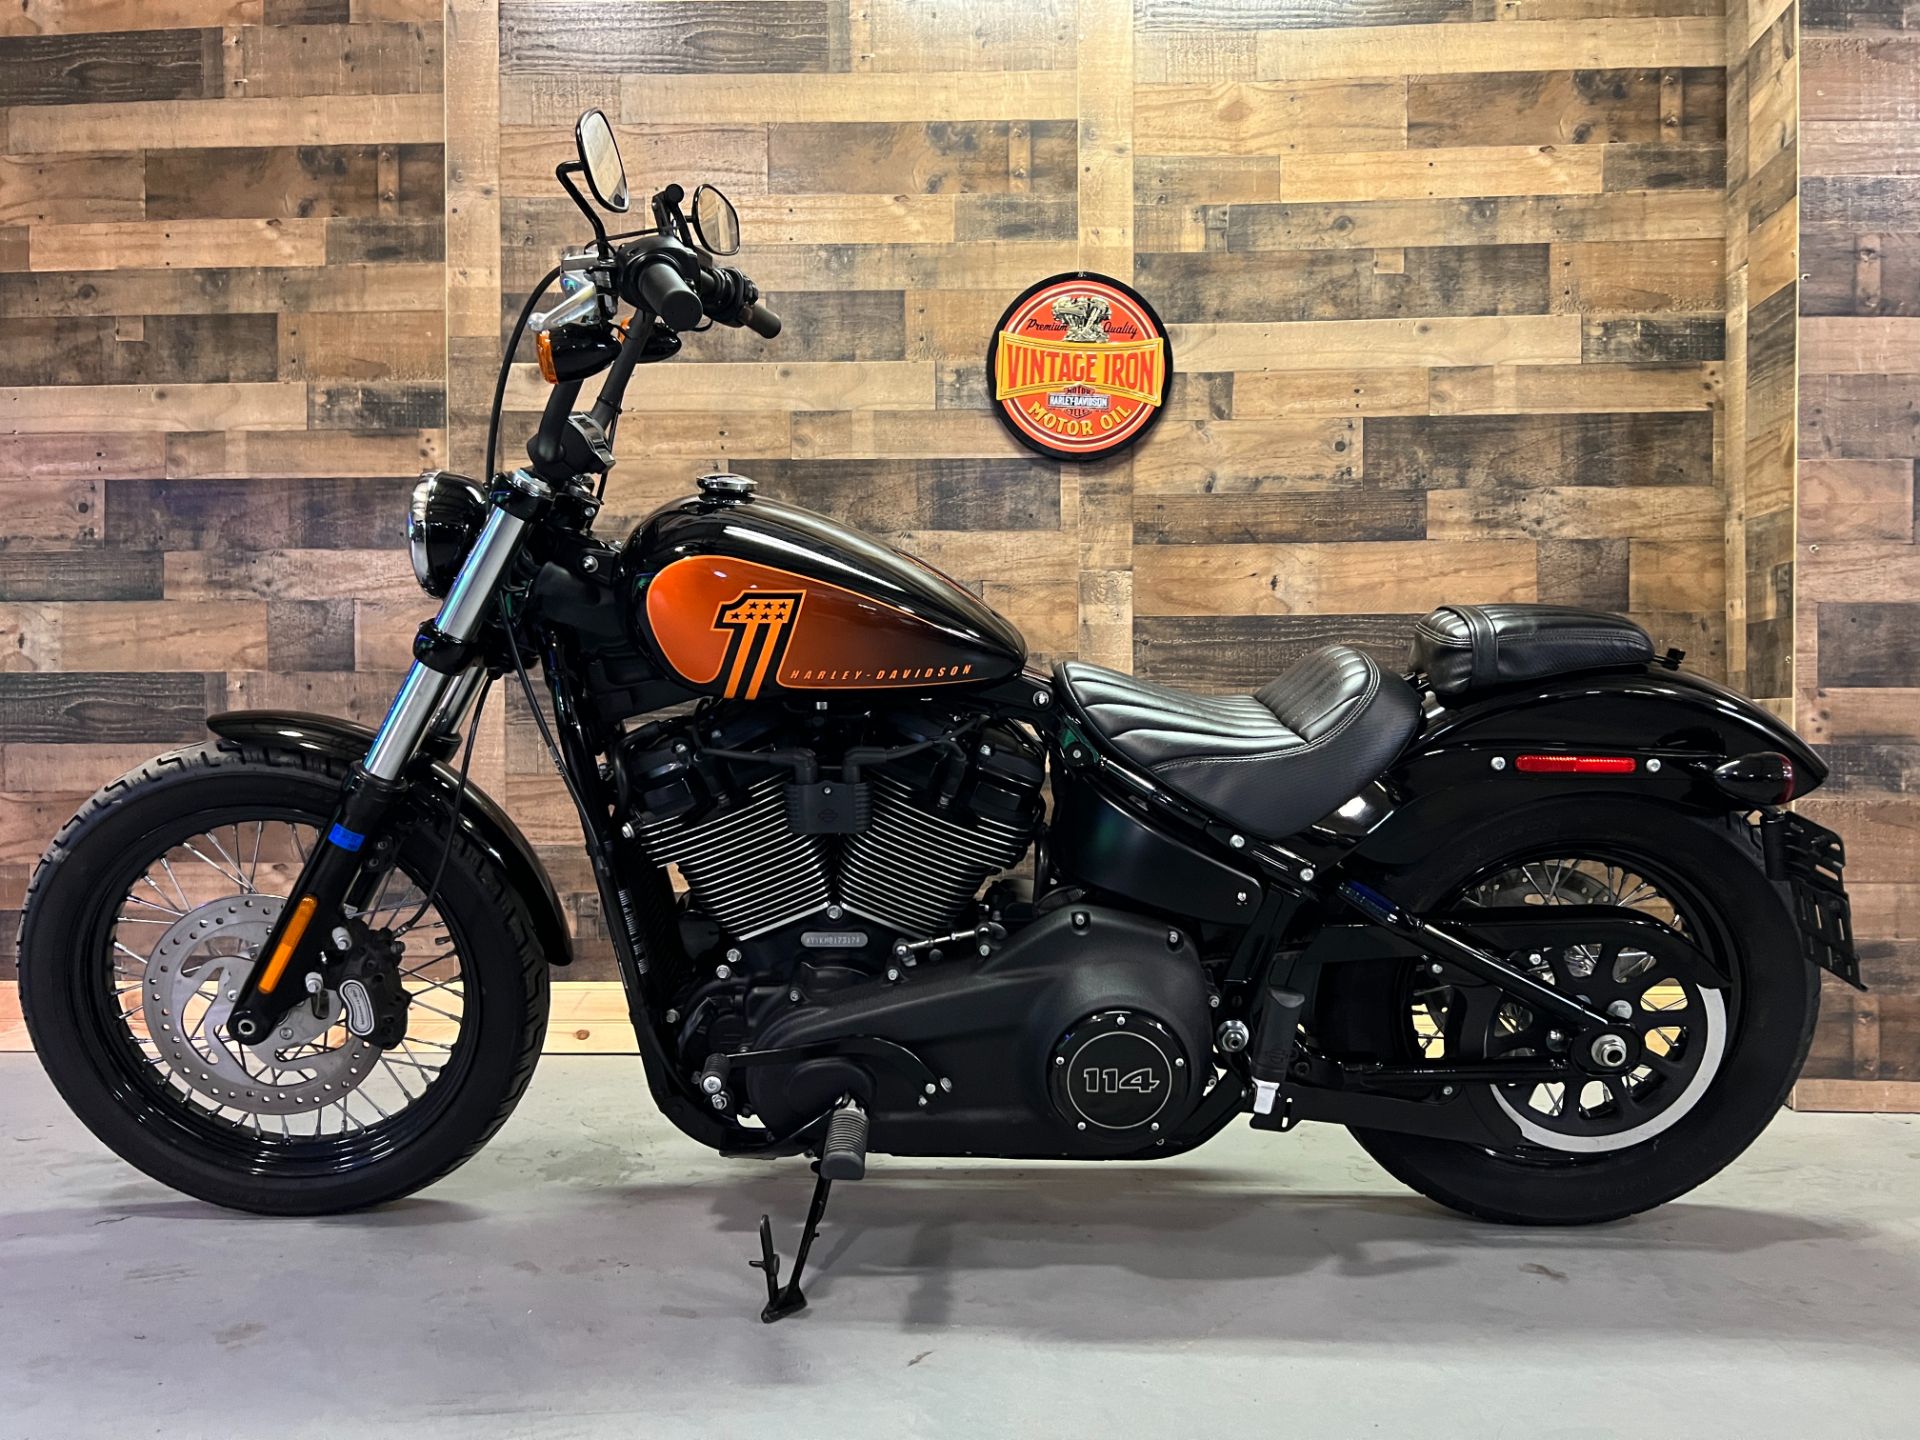 2021 Harley-Davidson Street Bob® 114 in Westfield, Massachusetts - Photo 2